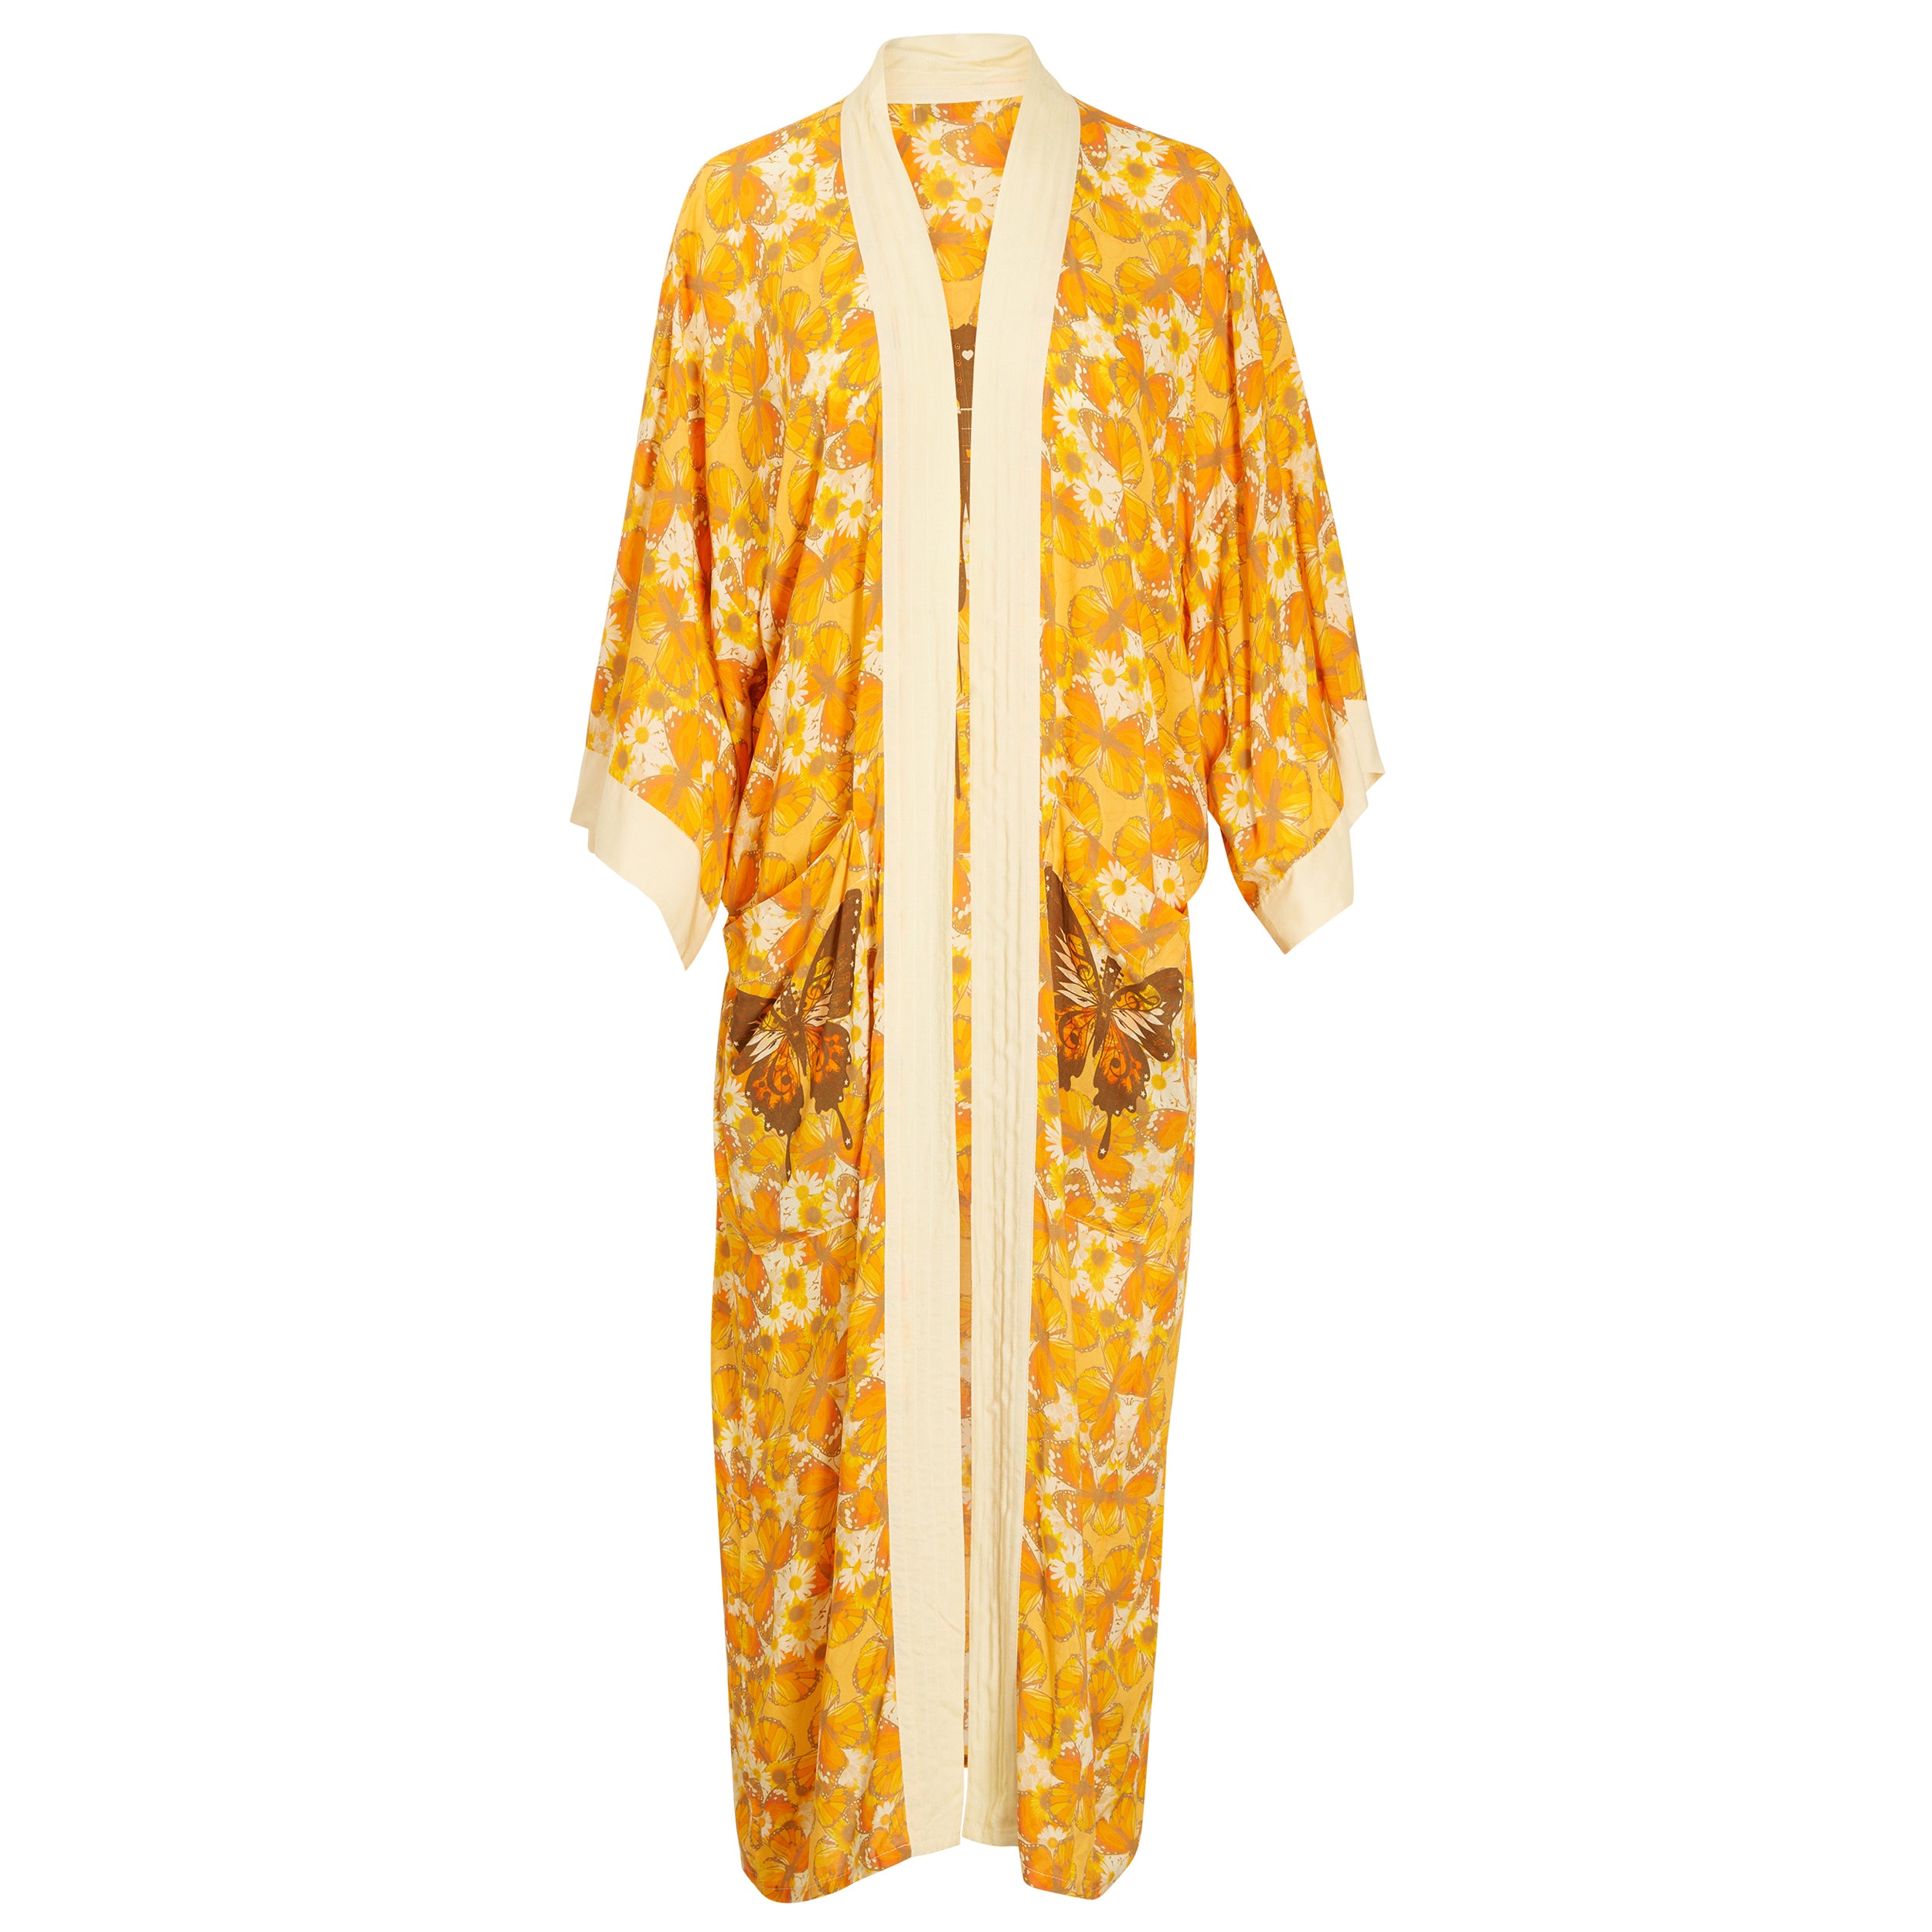 Laurel Canyon Kimono Robe and Sleep Mask Set.